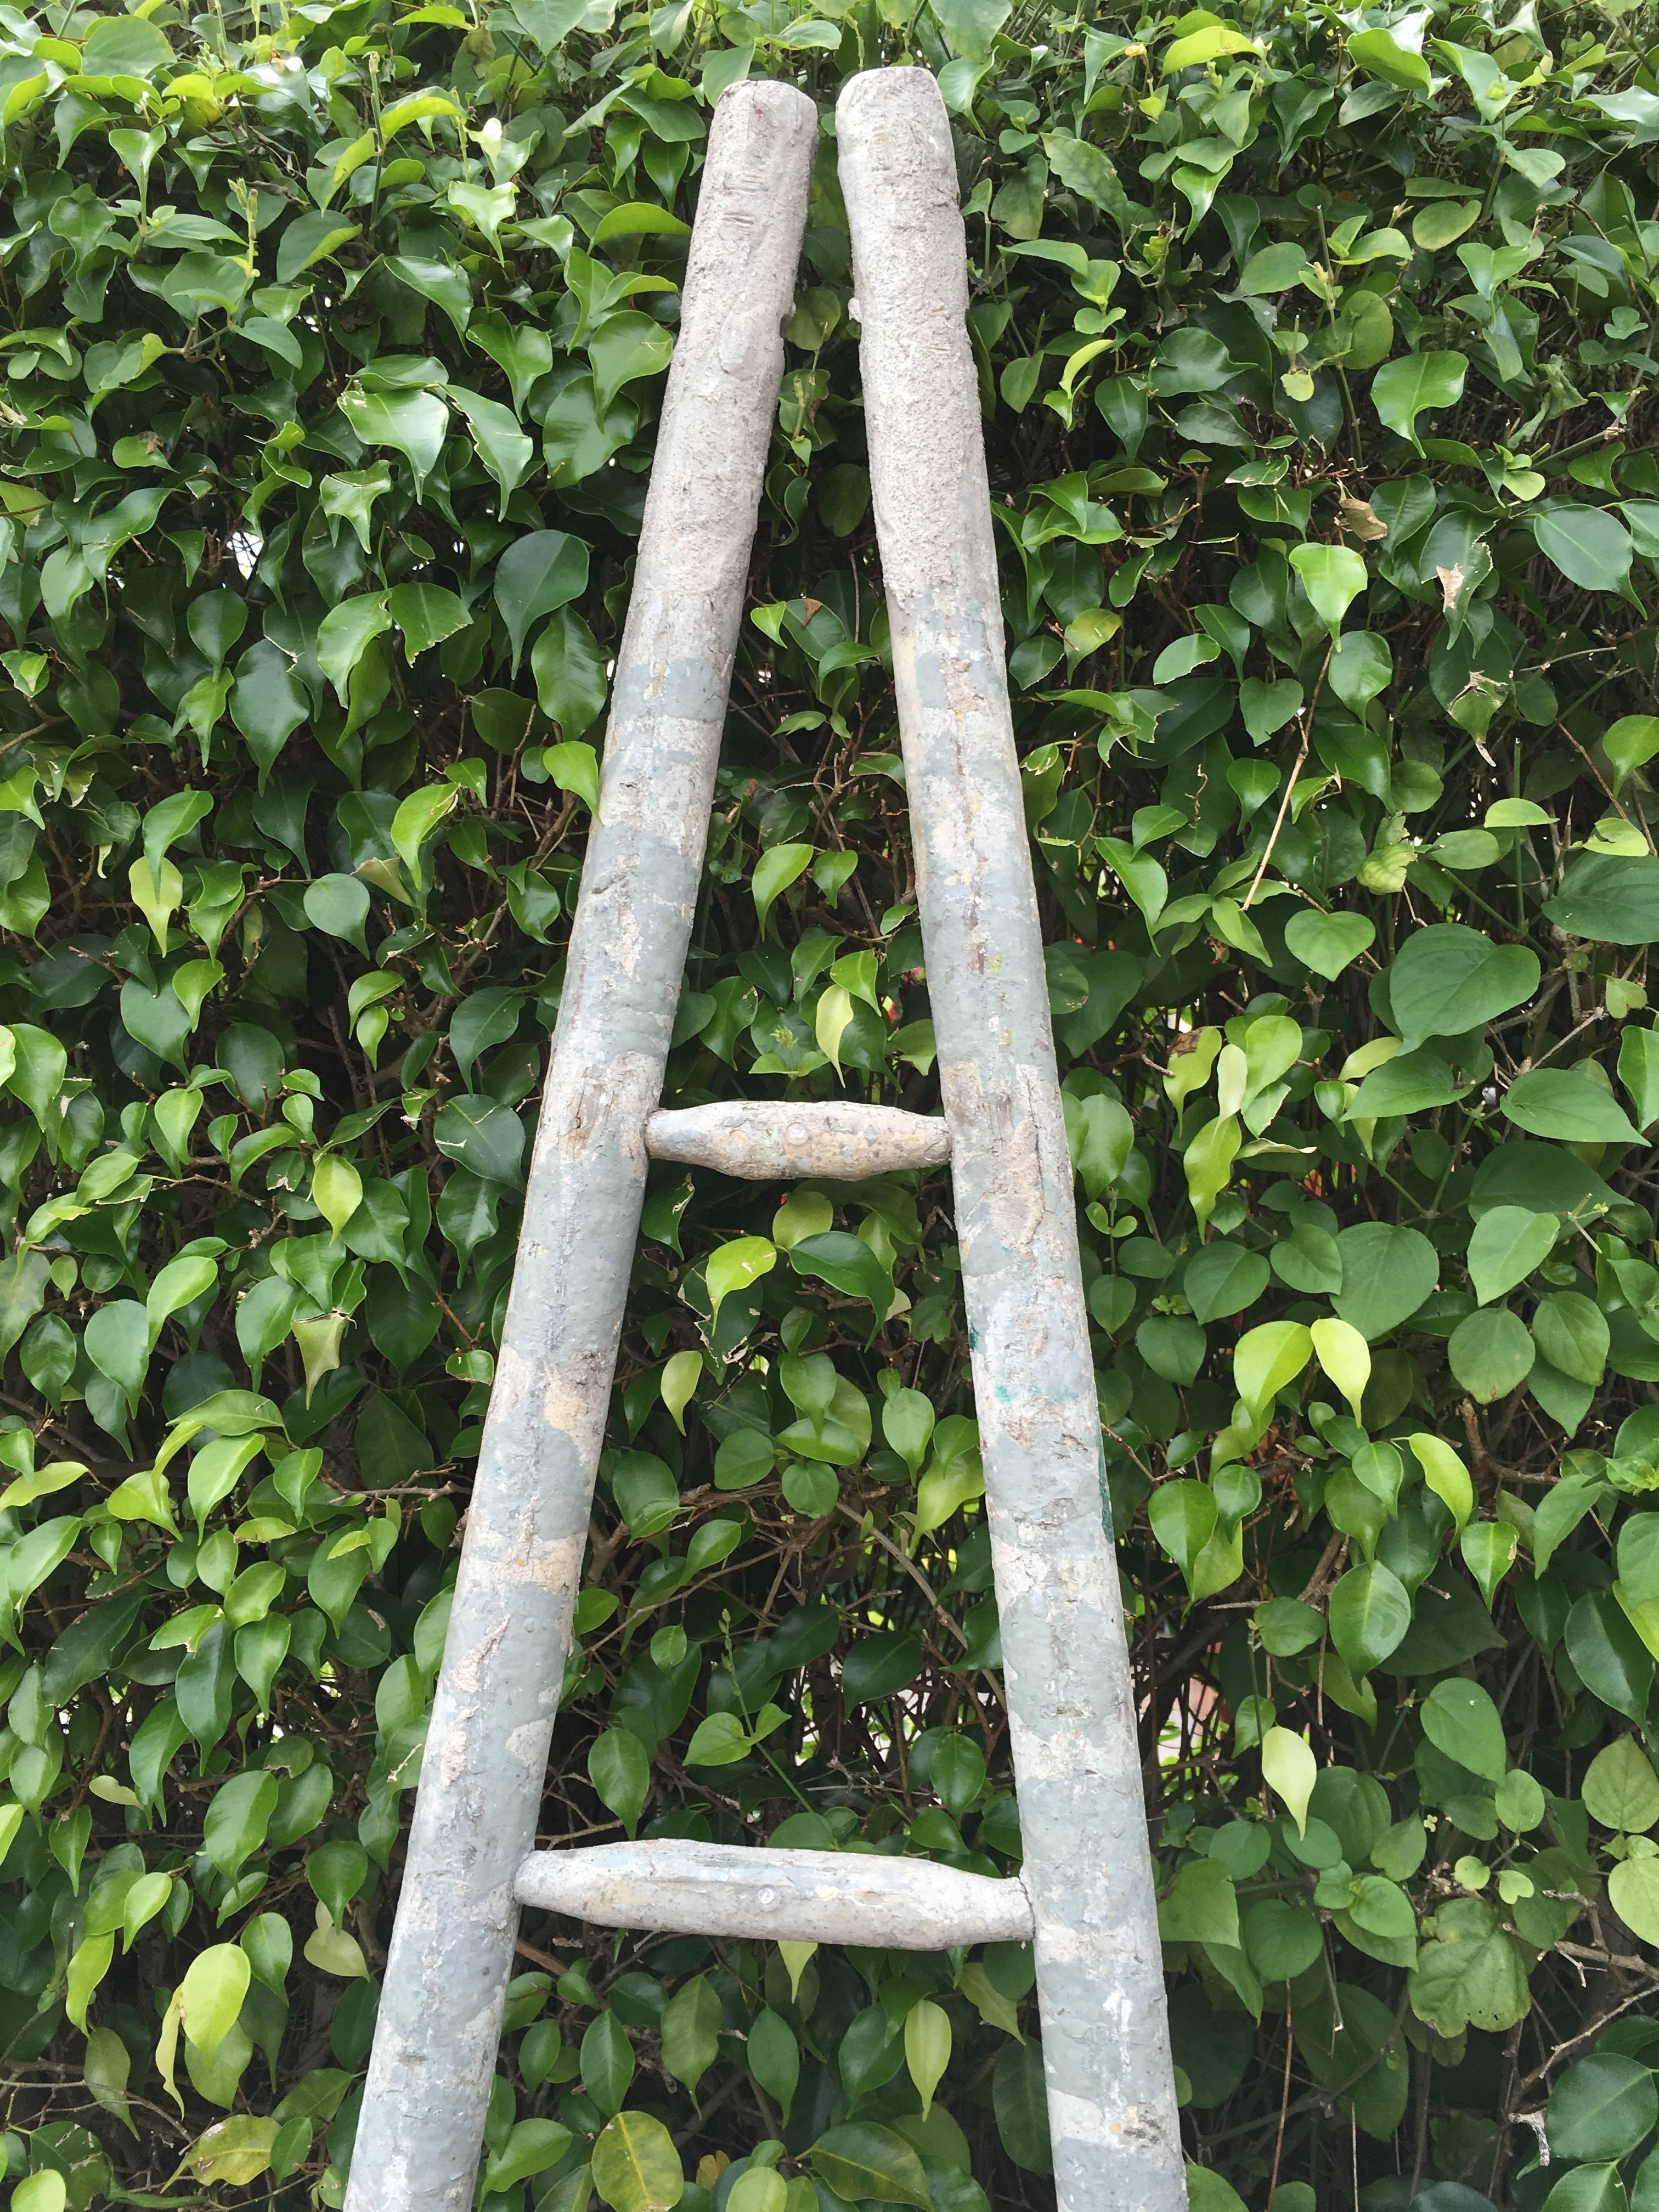 20th Century Vintage Orchard Ladder